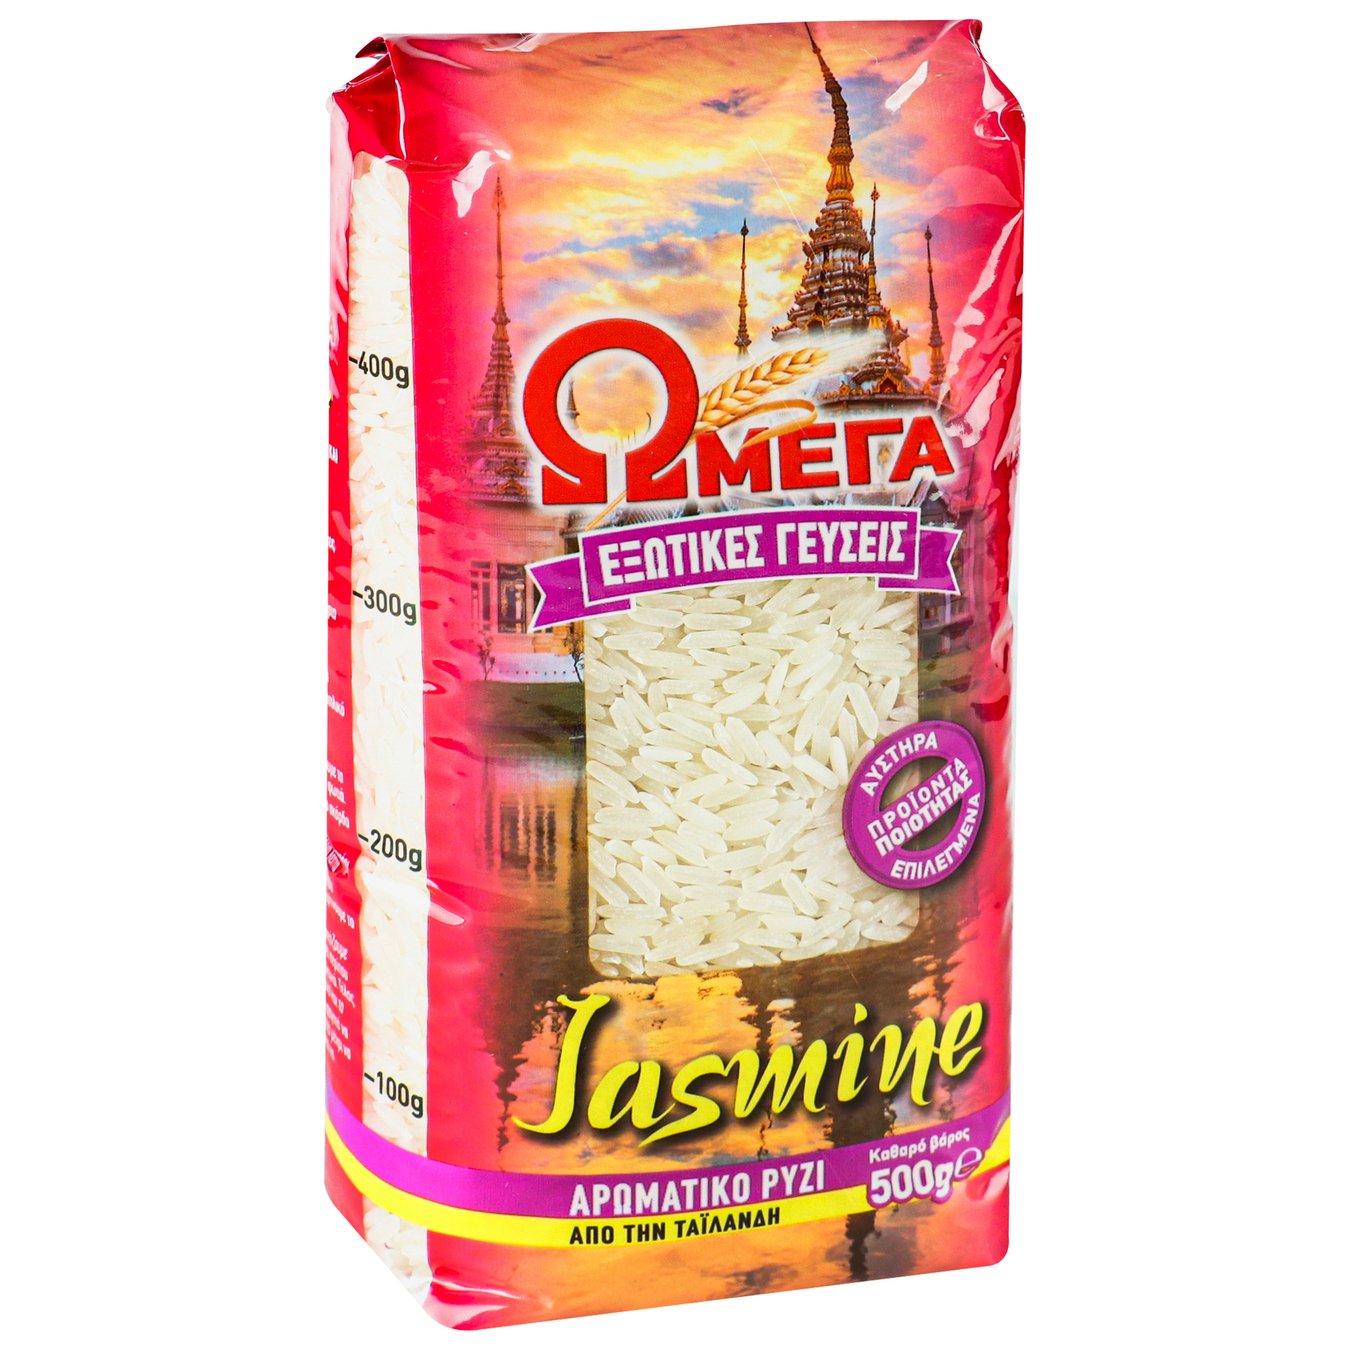 Rice Omega long Jasmine 500g 2